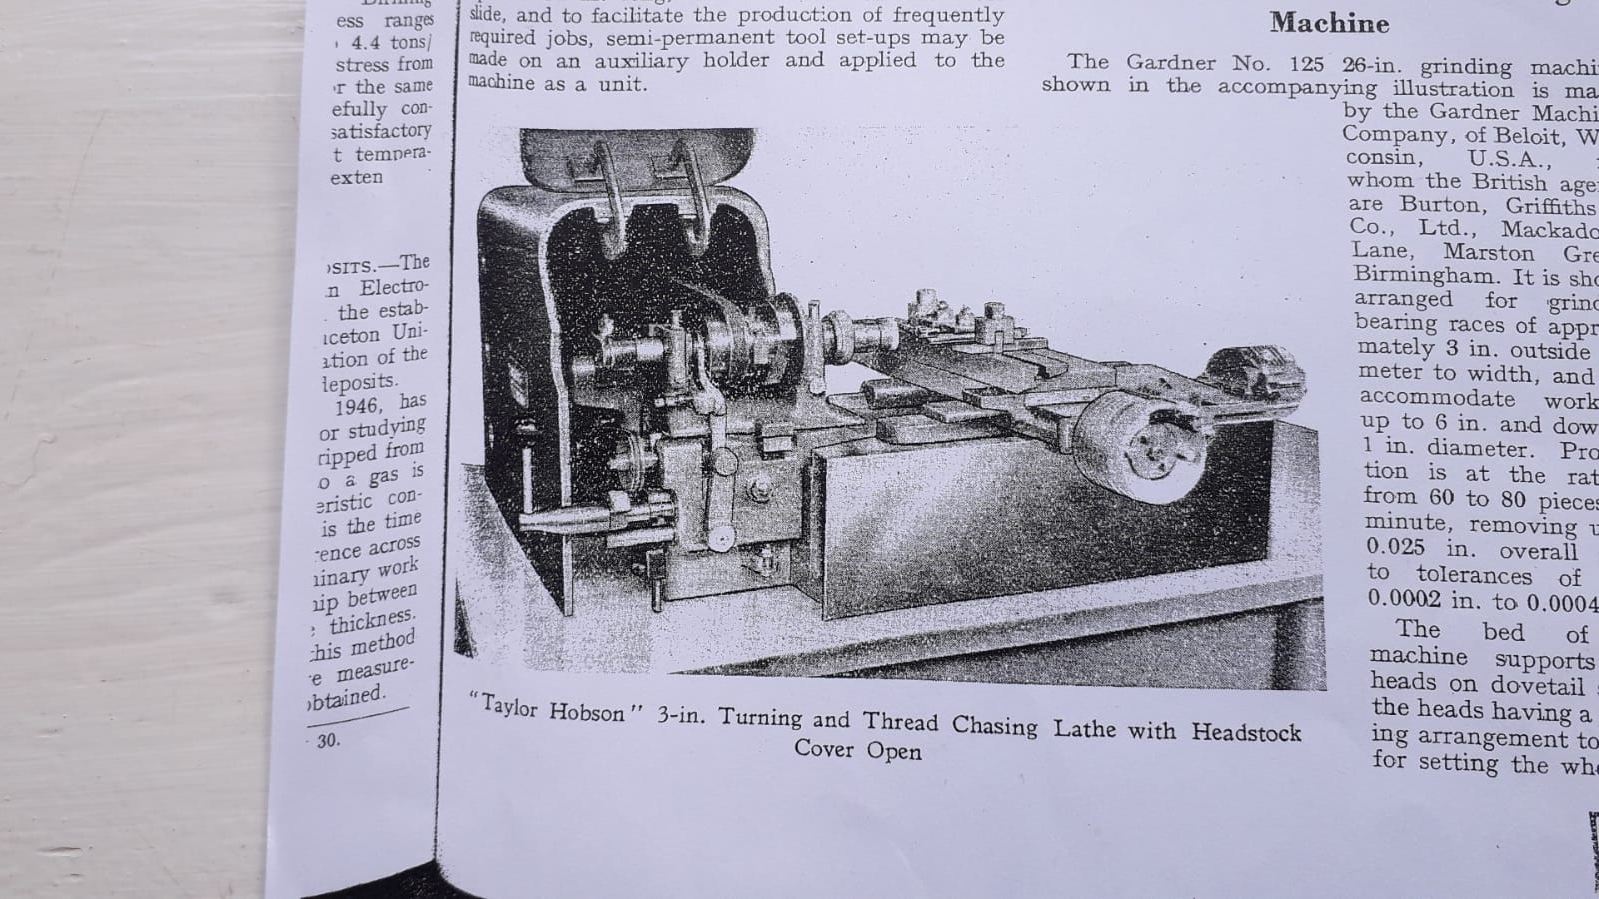 Machinery Magazine 18-Nov-1948 Pg711 excerpt.jpeg